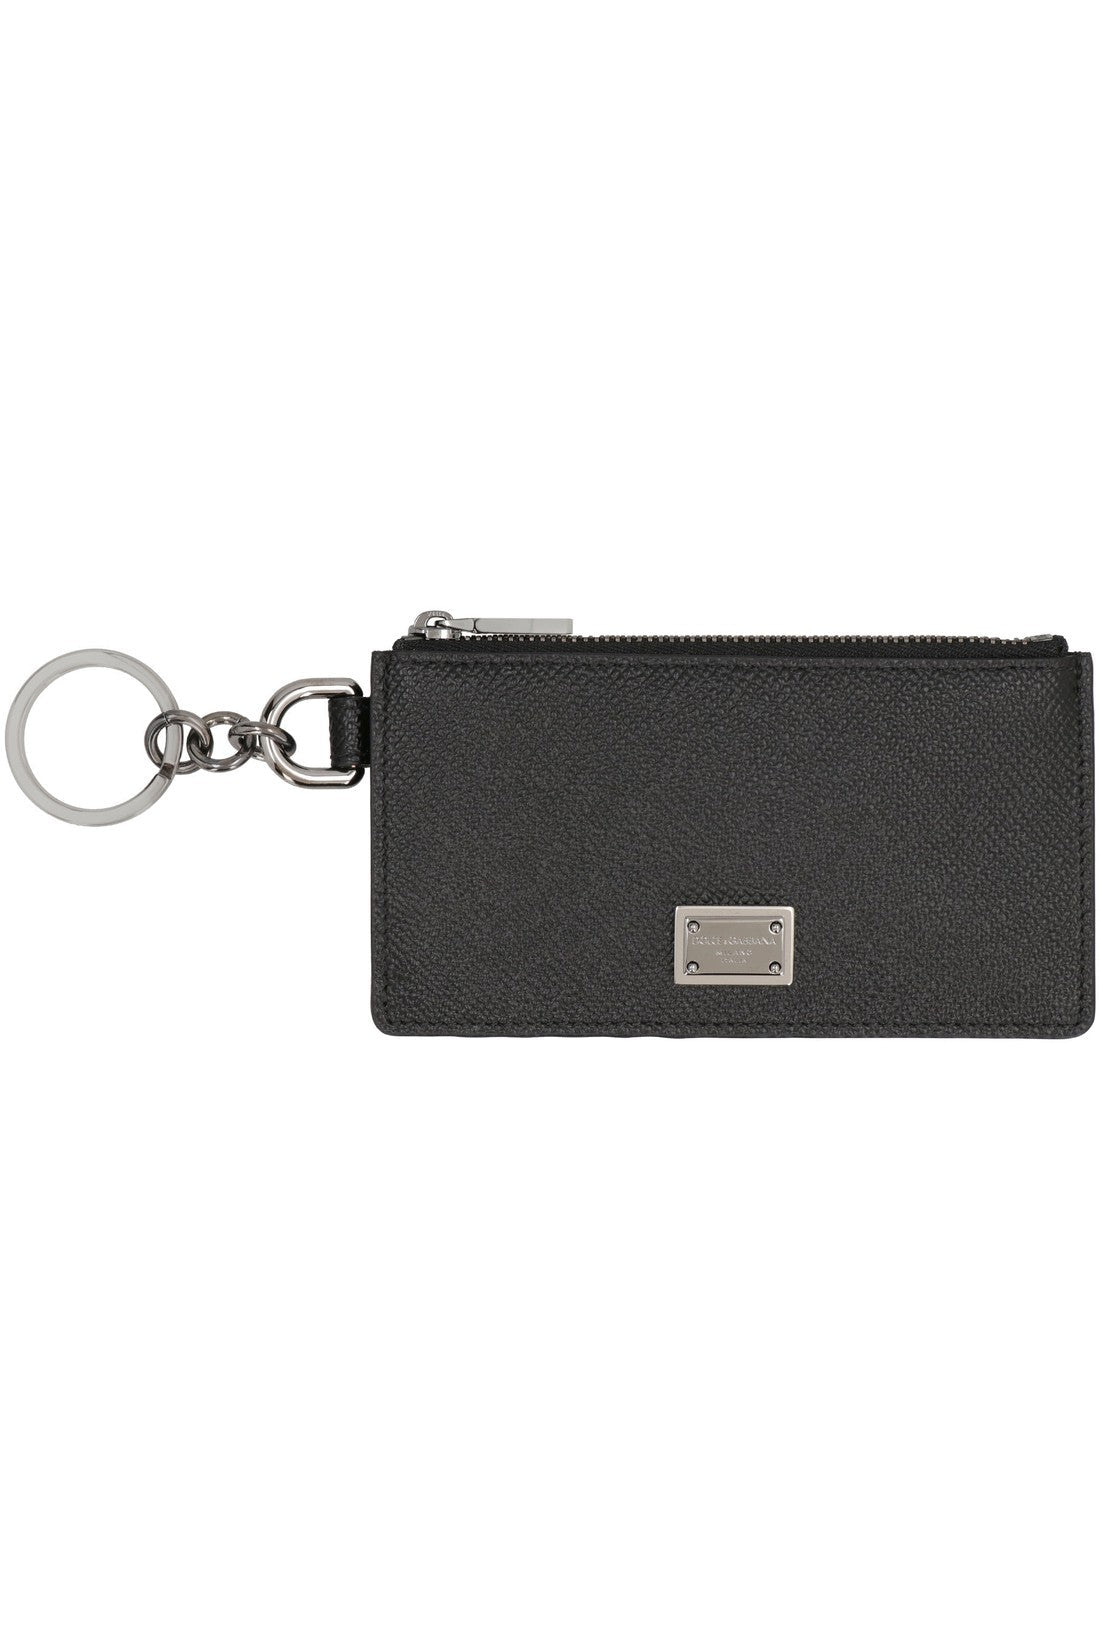 Dolce & Gabbana-OUTLET-SALE-Leather card holder-ARCHIVIST